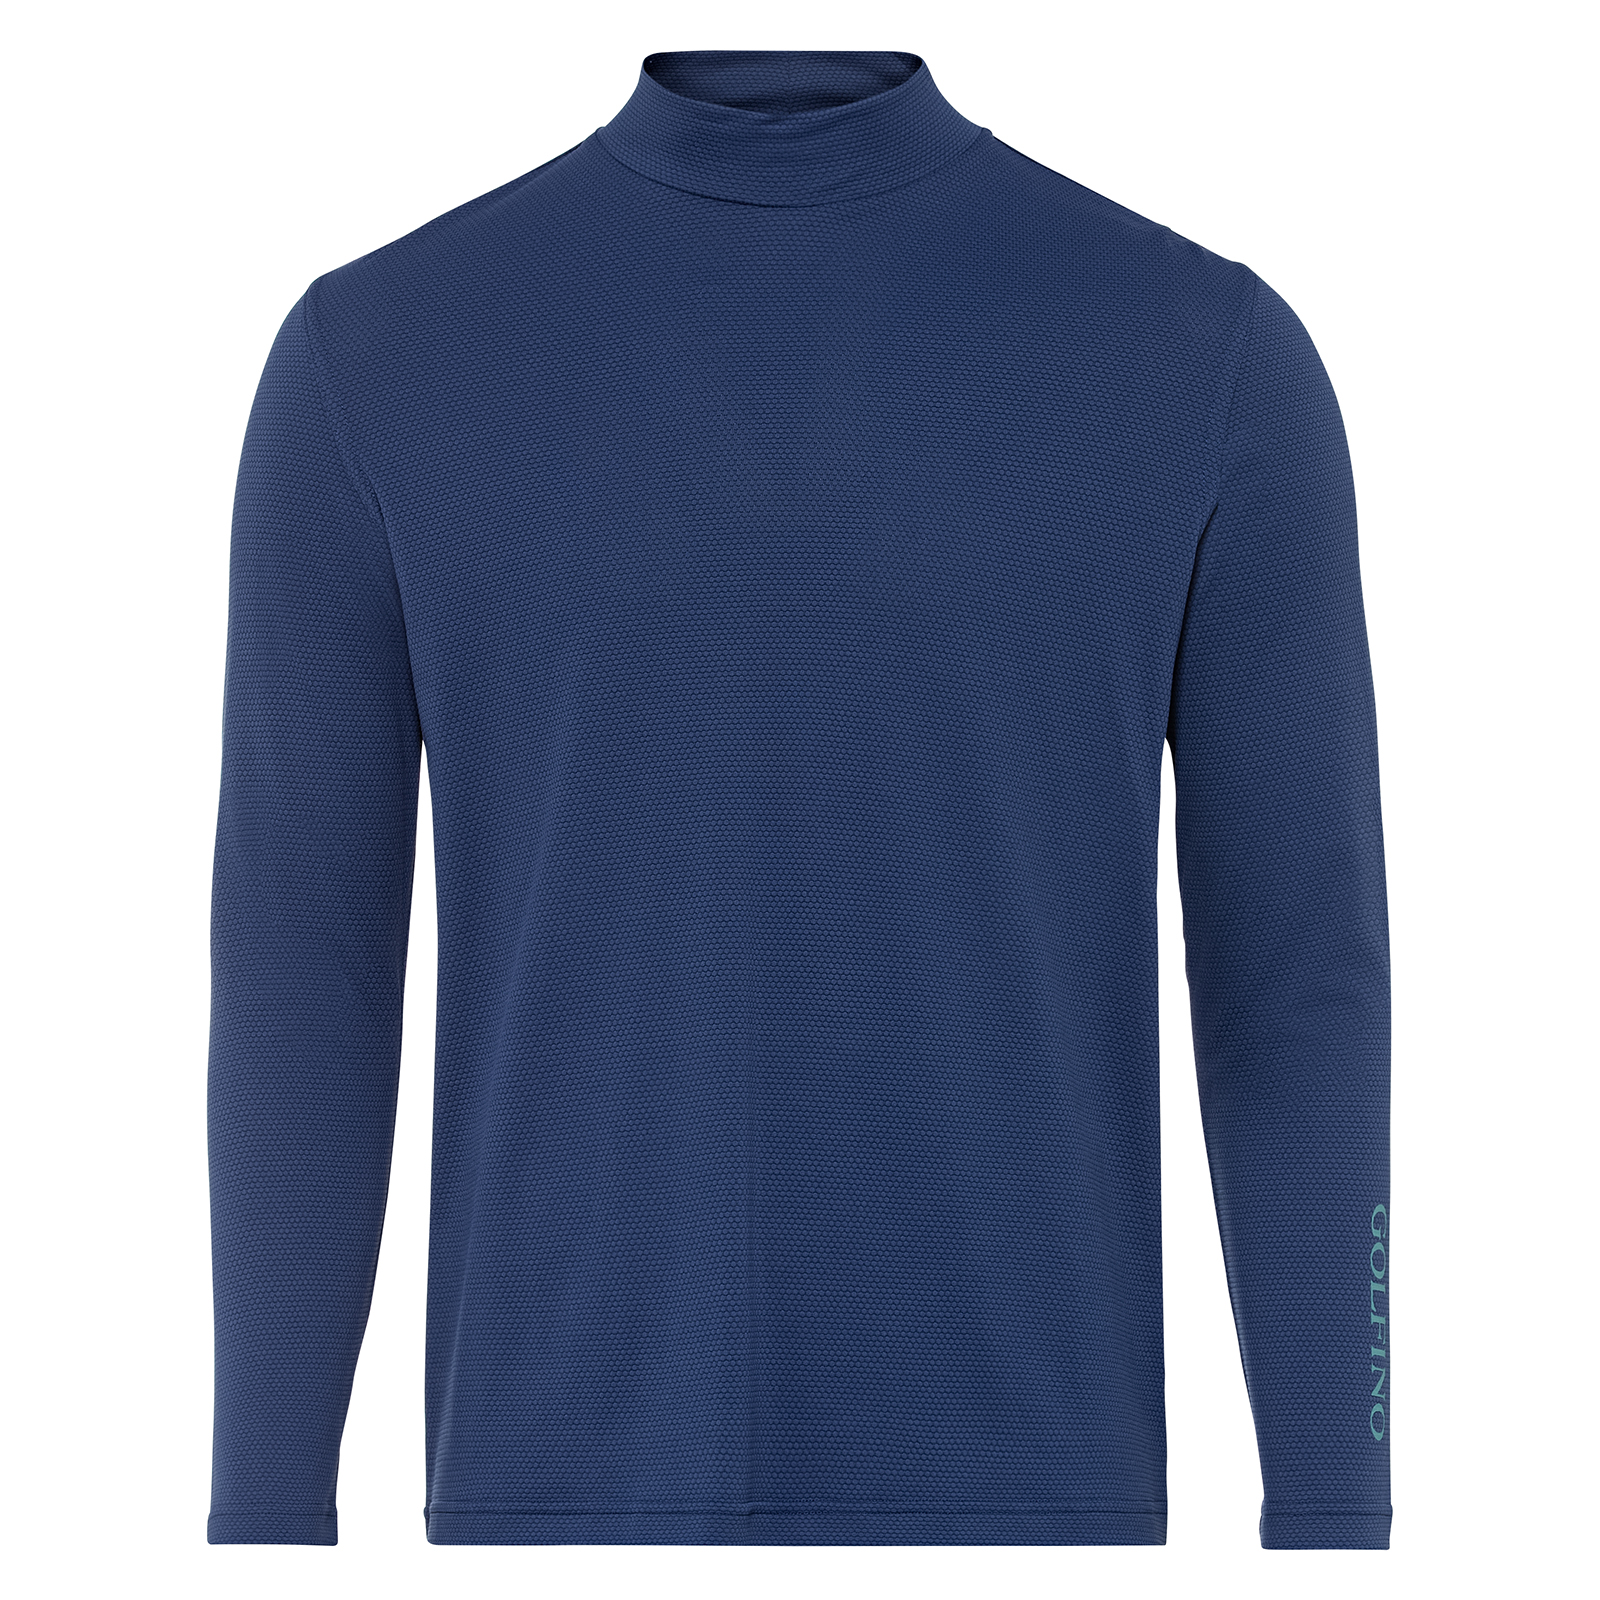 Men's long-sleeved bubble jacquard golf shirt